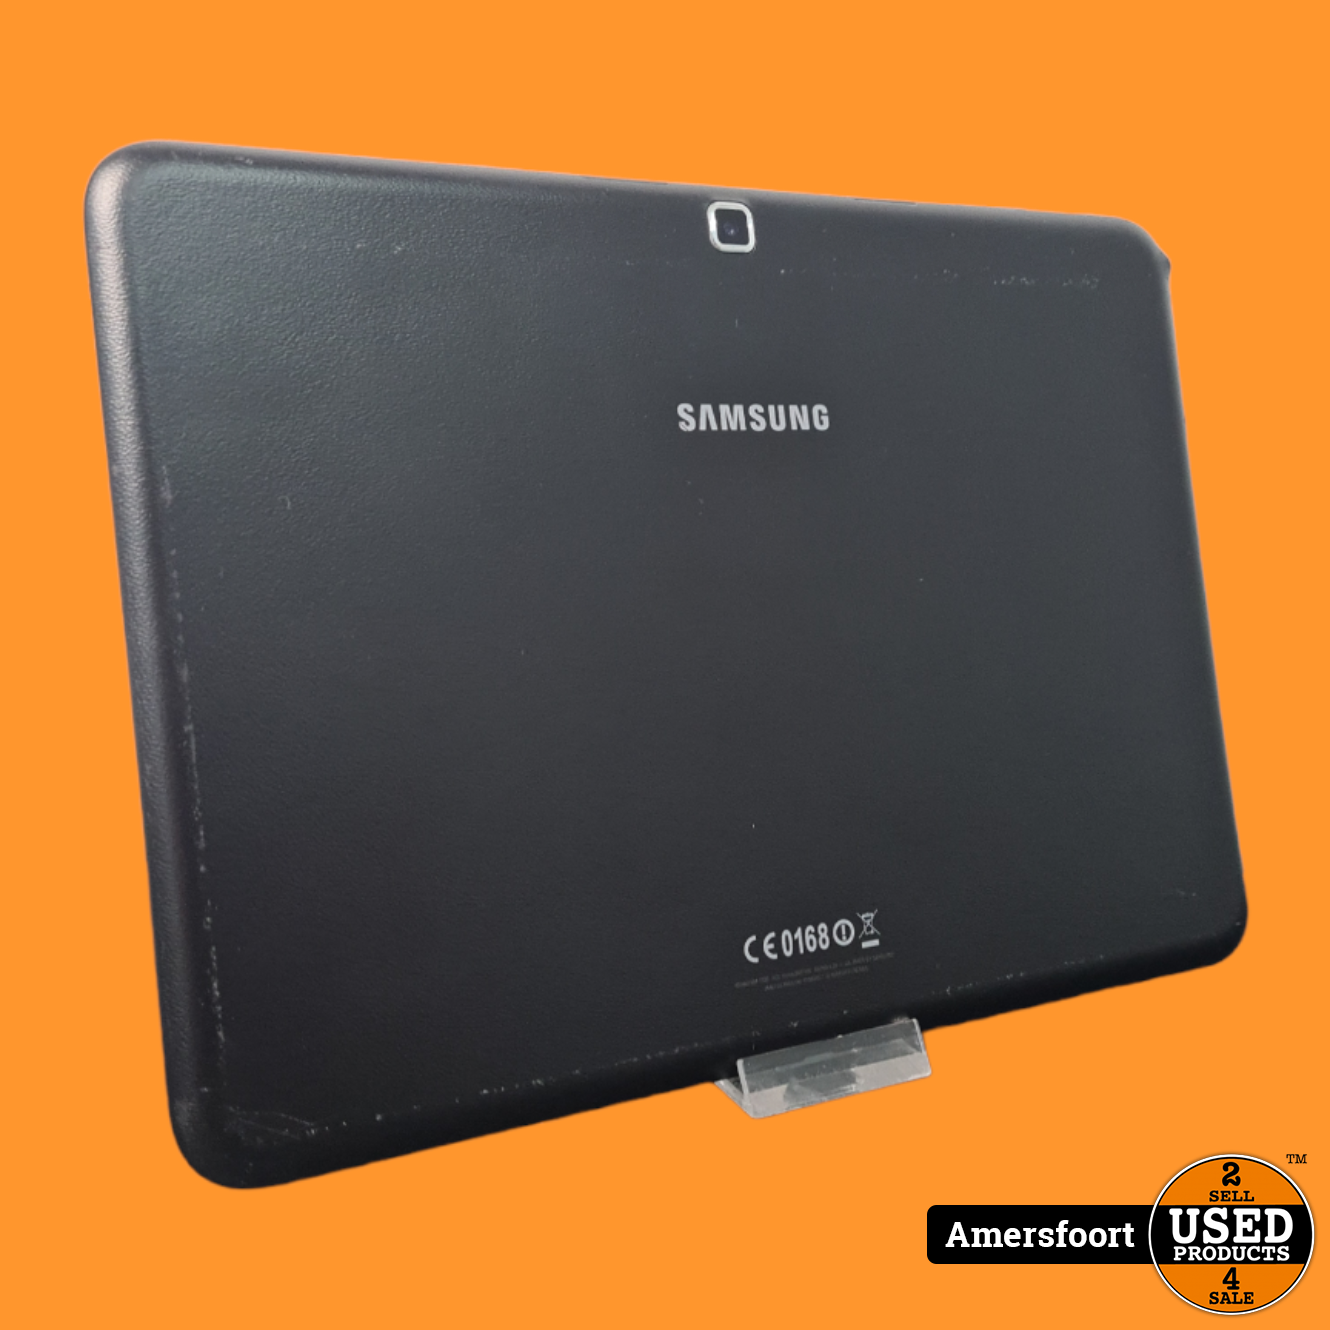 Aardrijkskunde verlamming porselein Samsung Galaxy Tab 4 10.1 16GB Wifi - Used Products Amersfoort